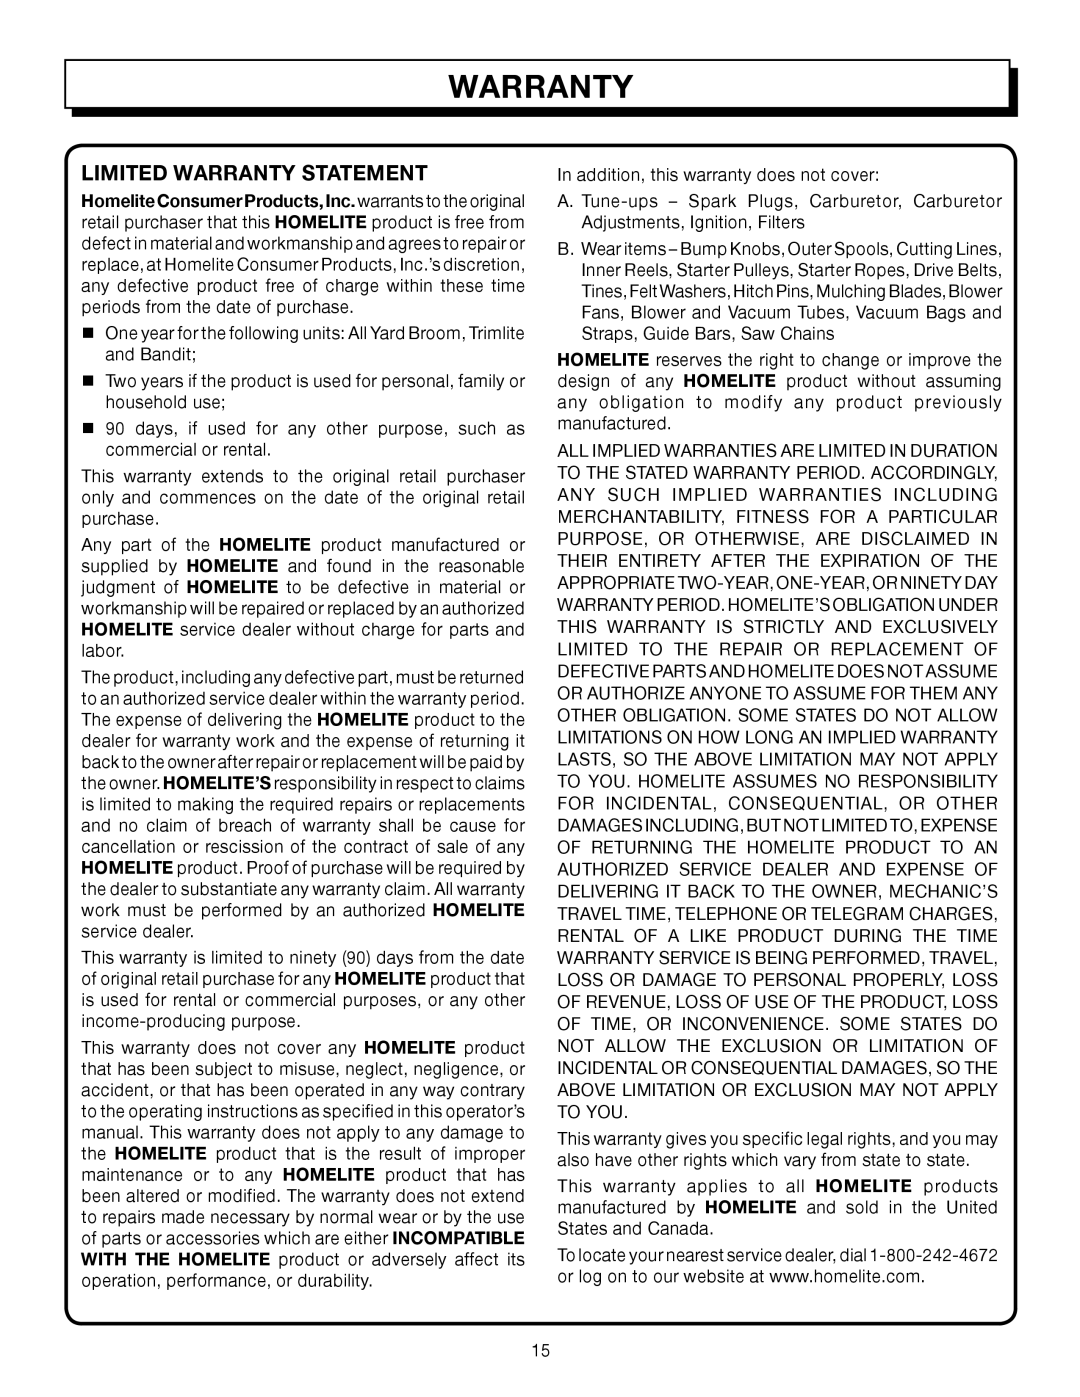 Homelite UT08512B manual Limited Warranty Statement 